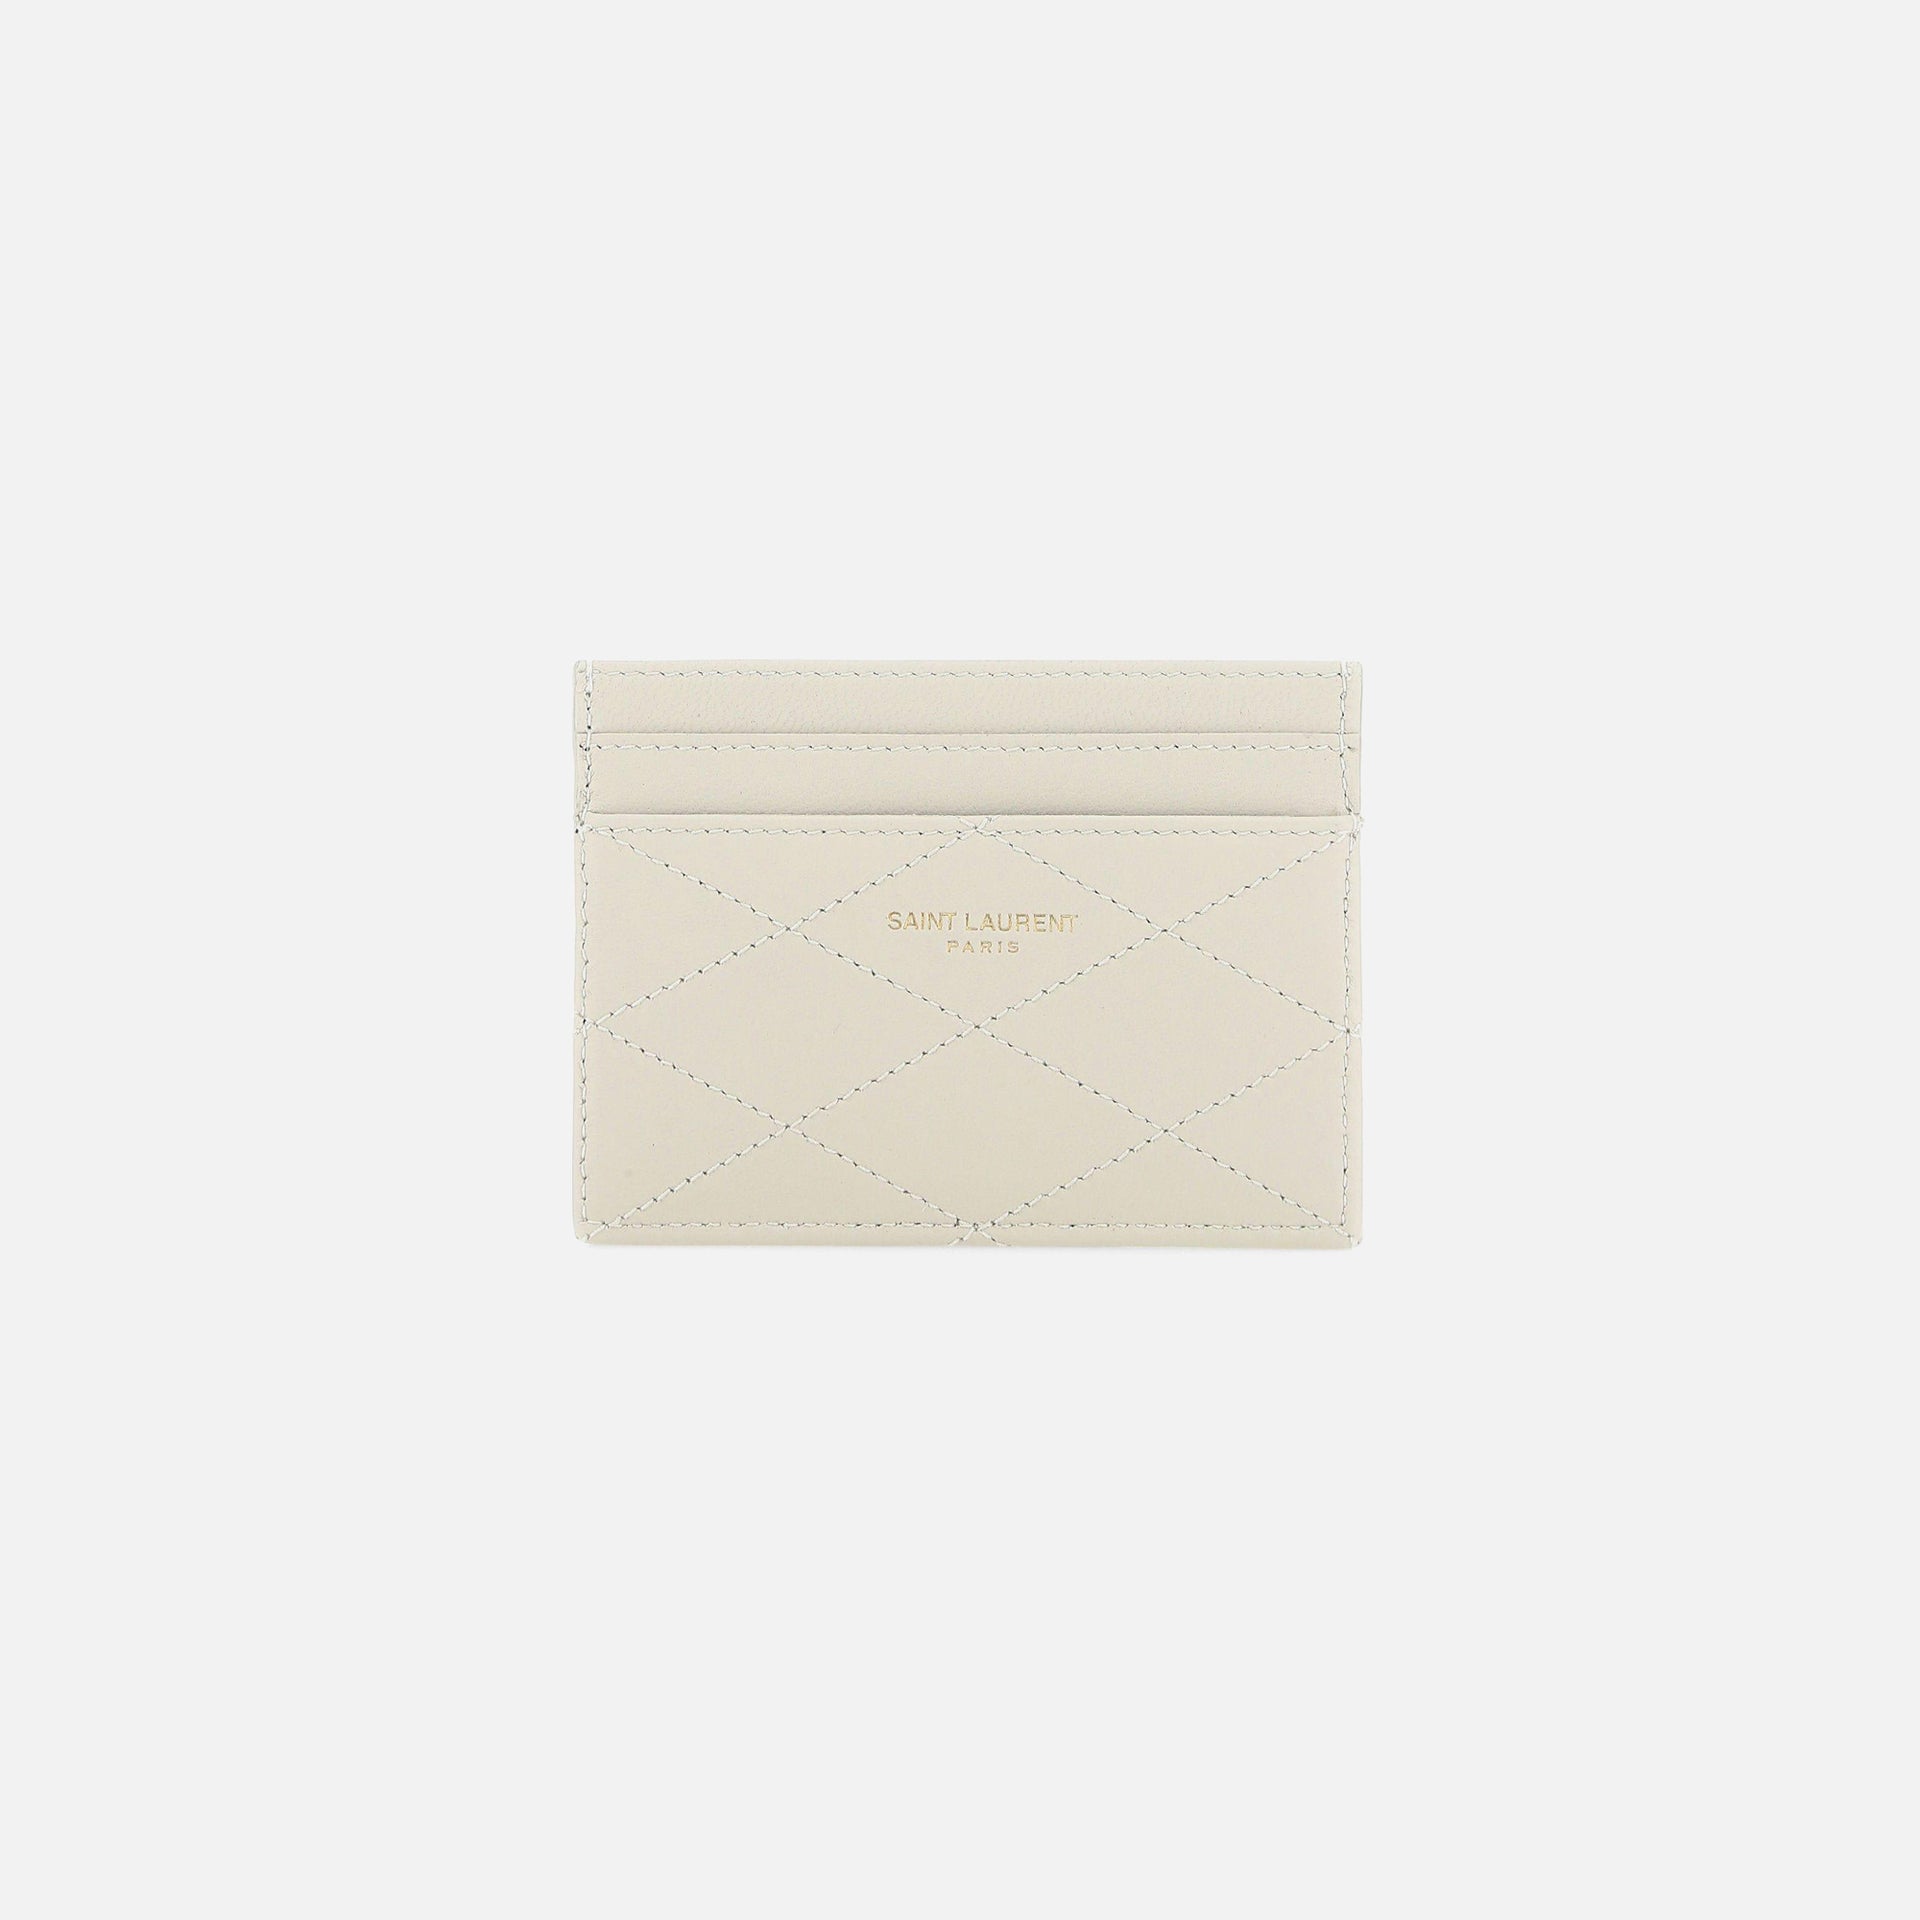 Saint Laurent Cross Hatch Card Holder - Crema Soft